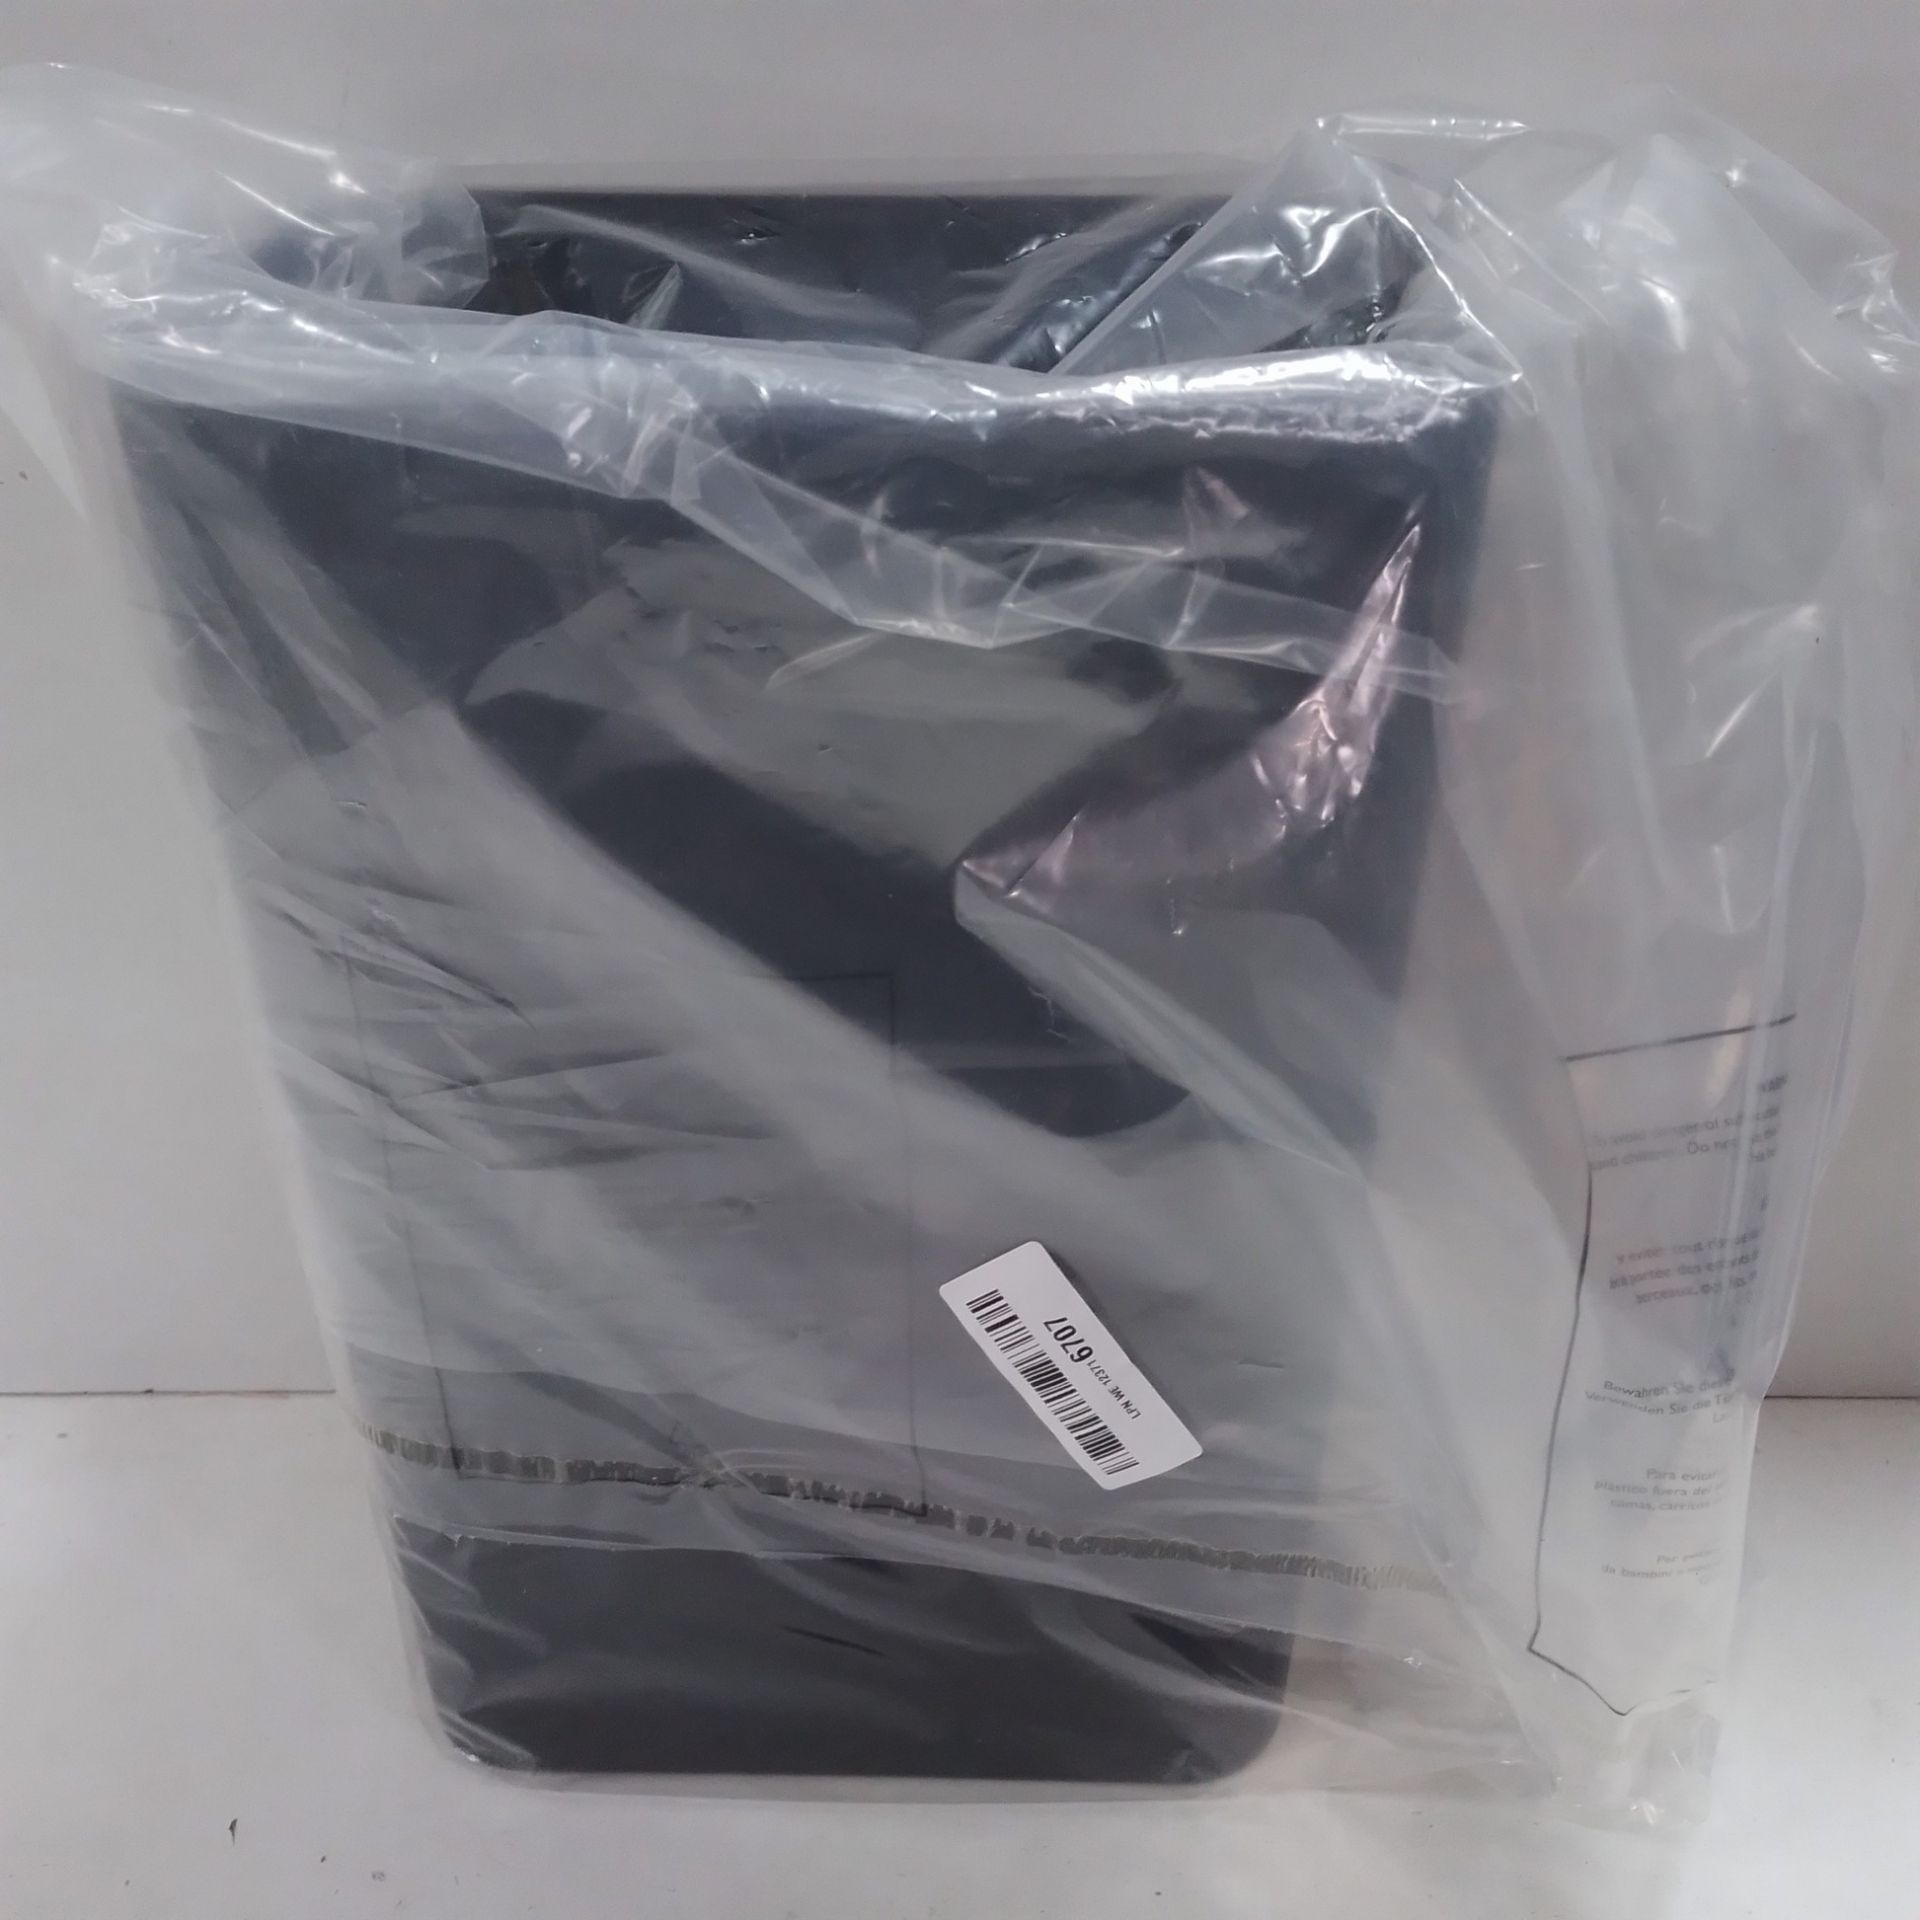 RRP £20.80 Rinboat Plastic Slim Black Swing Bin Dustbin with Lid, 14 Litre, 1 Pack - Image 2 of 2